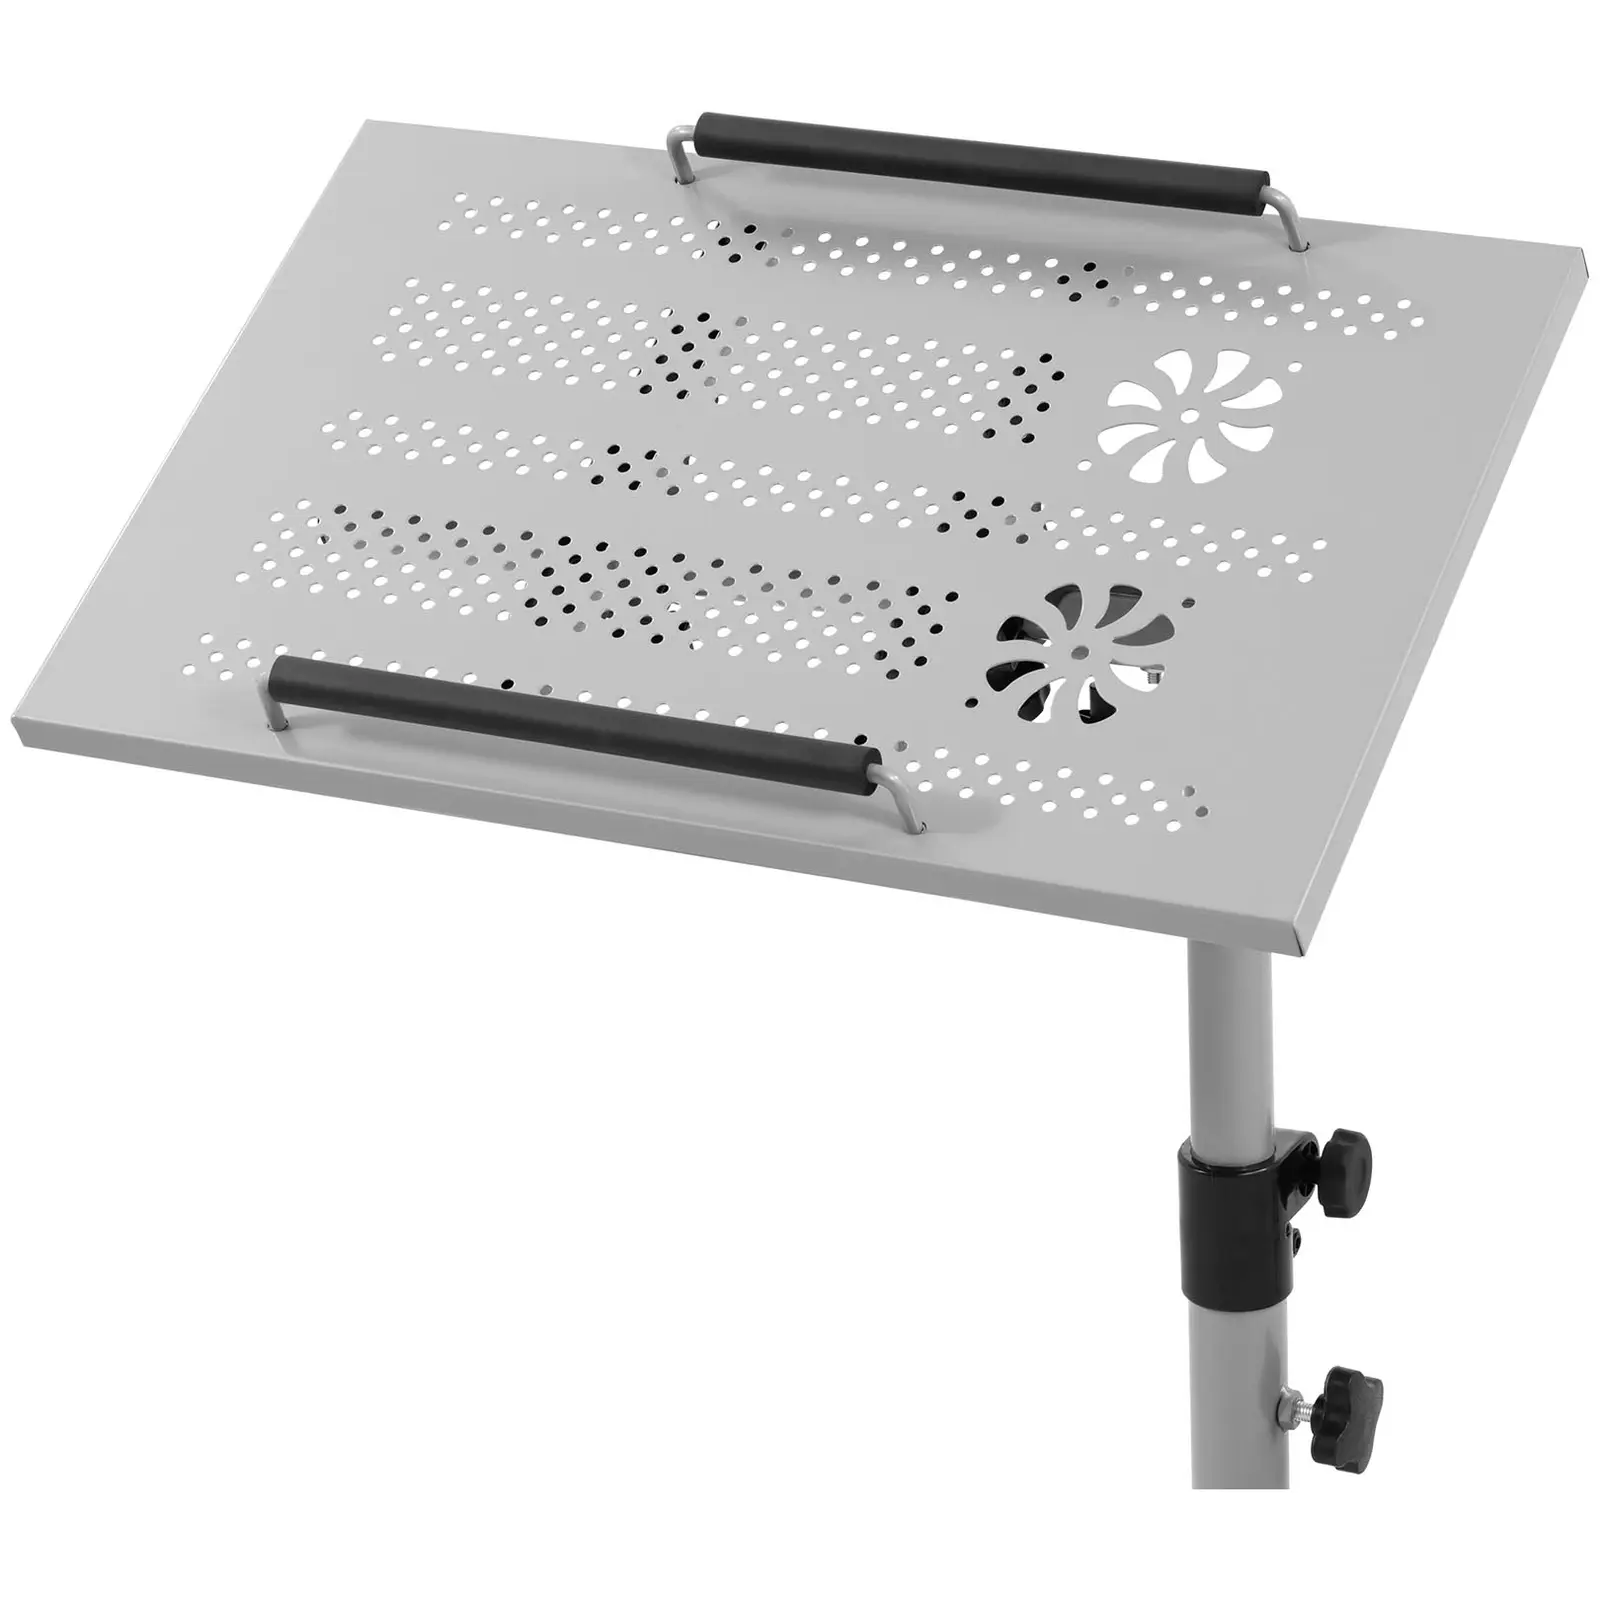 Laptop table - height adjustable 58 - 82 cm - wheels